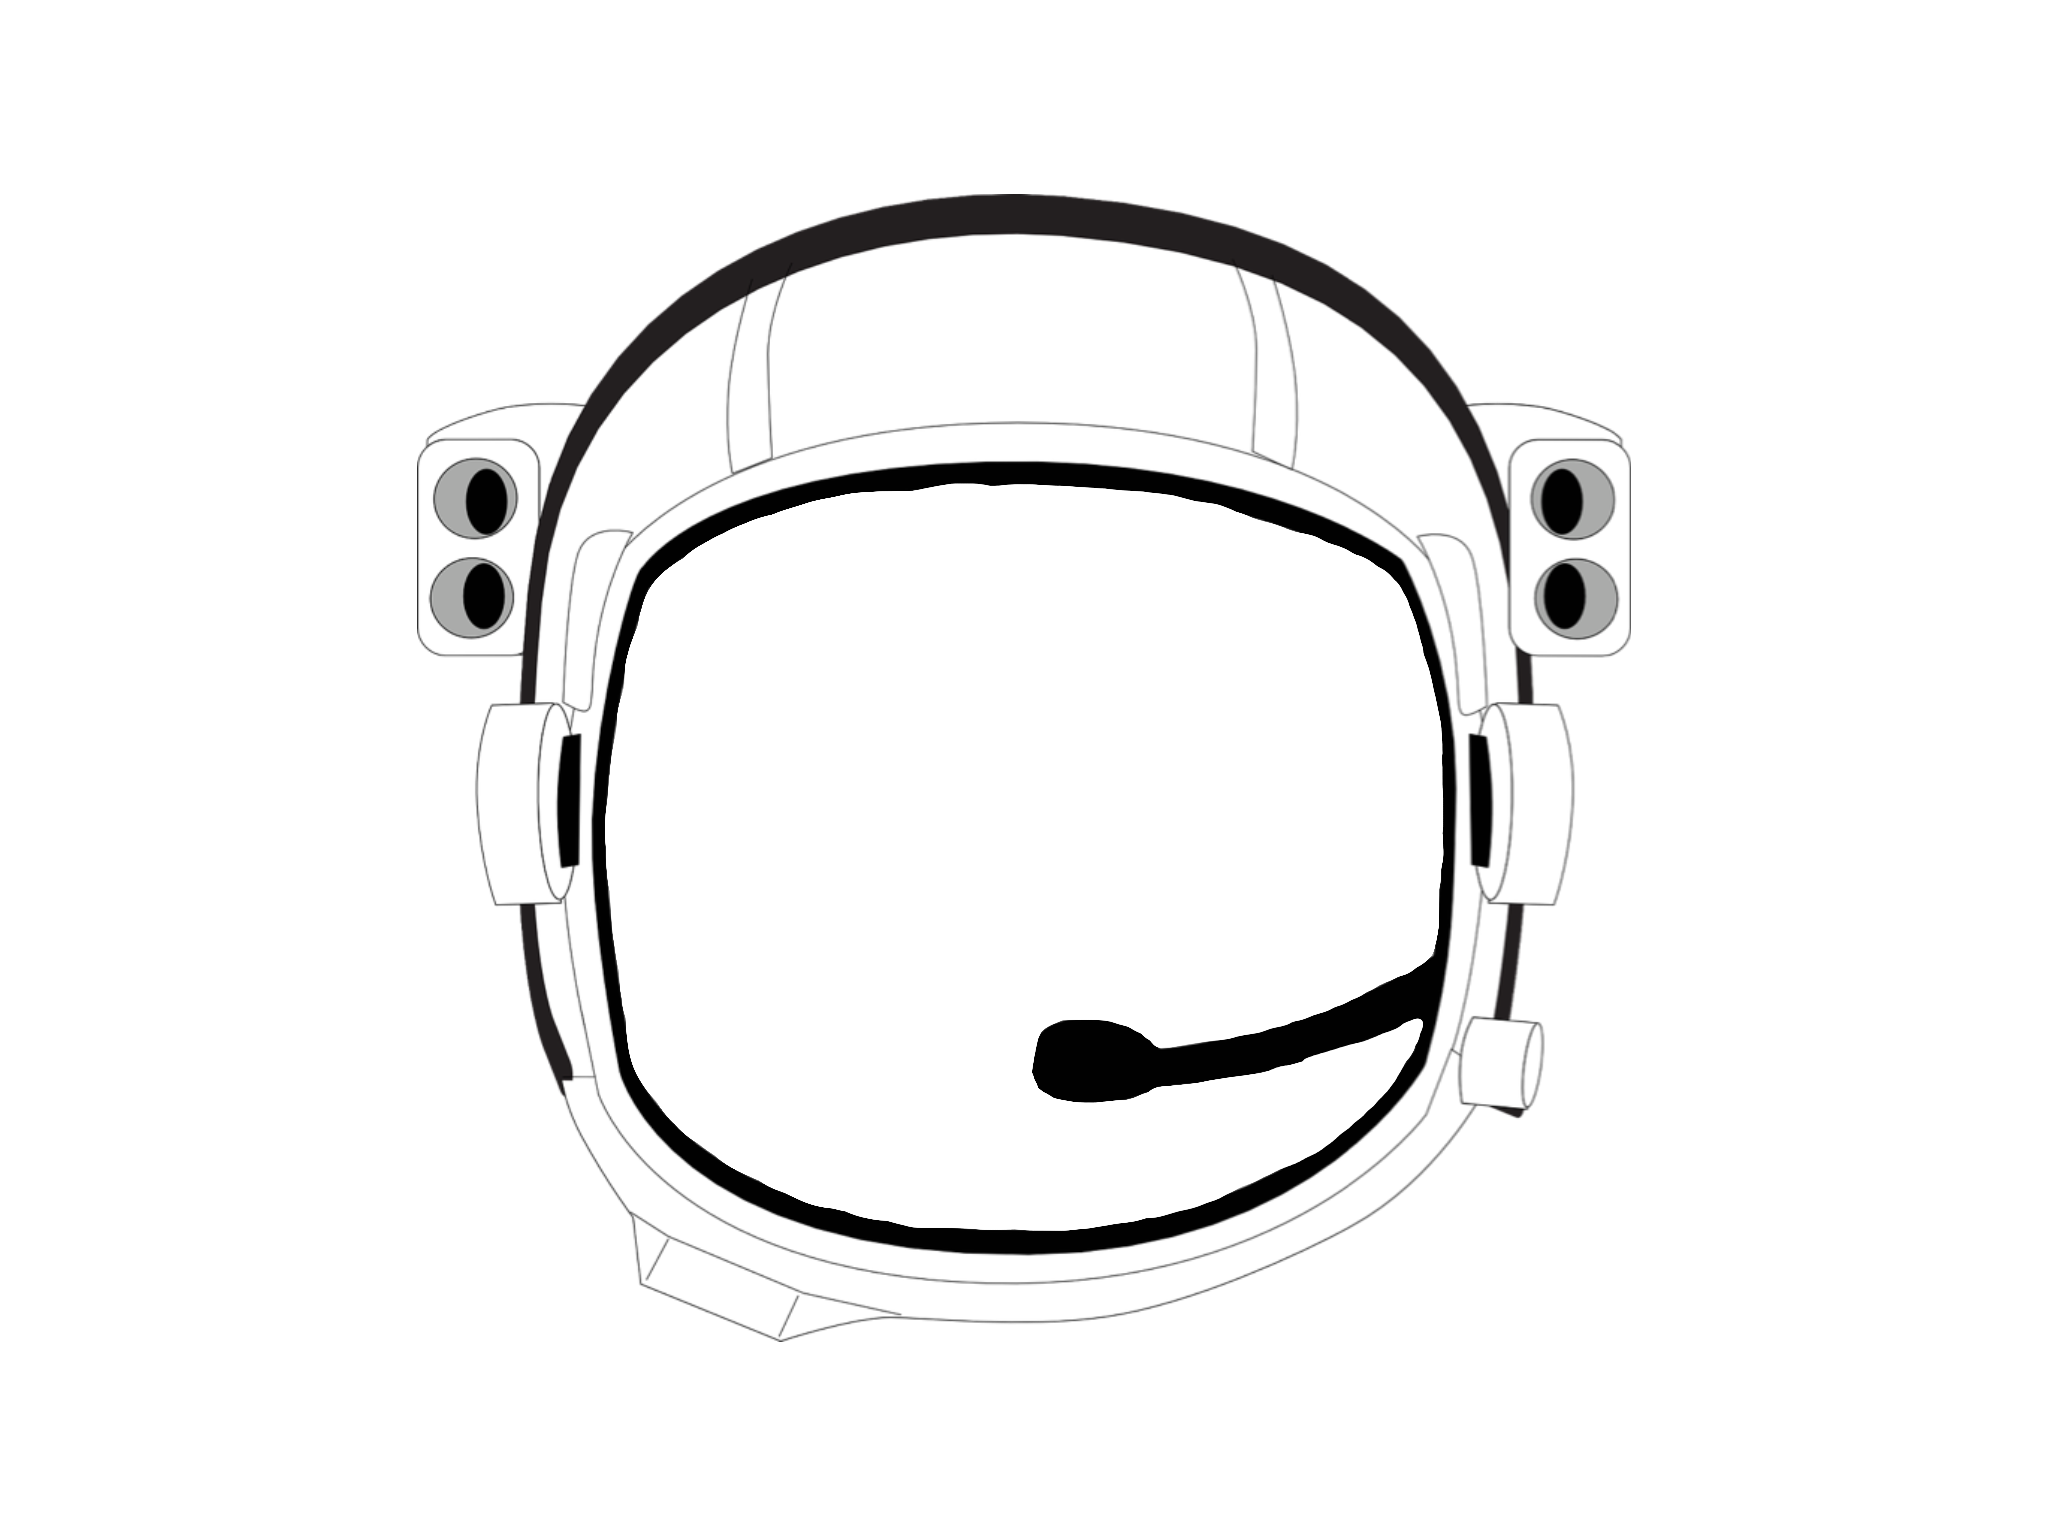 Шлем Космонавта. Шлем от скафандра. Маска космический шлем. Маска скафандр. Шаблон шлема космонавта для фотосессии